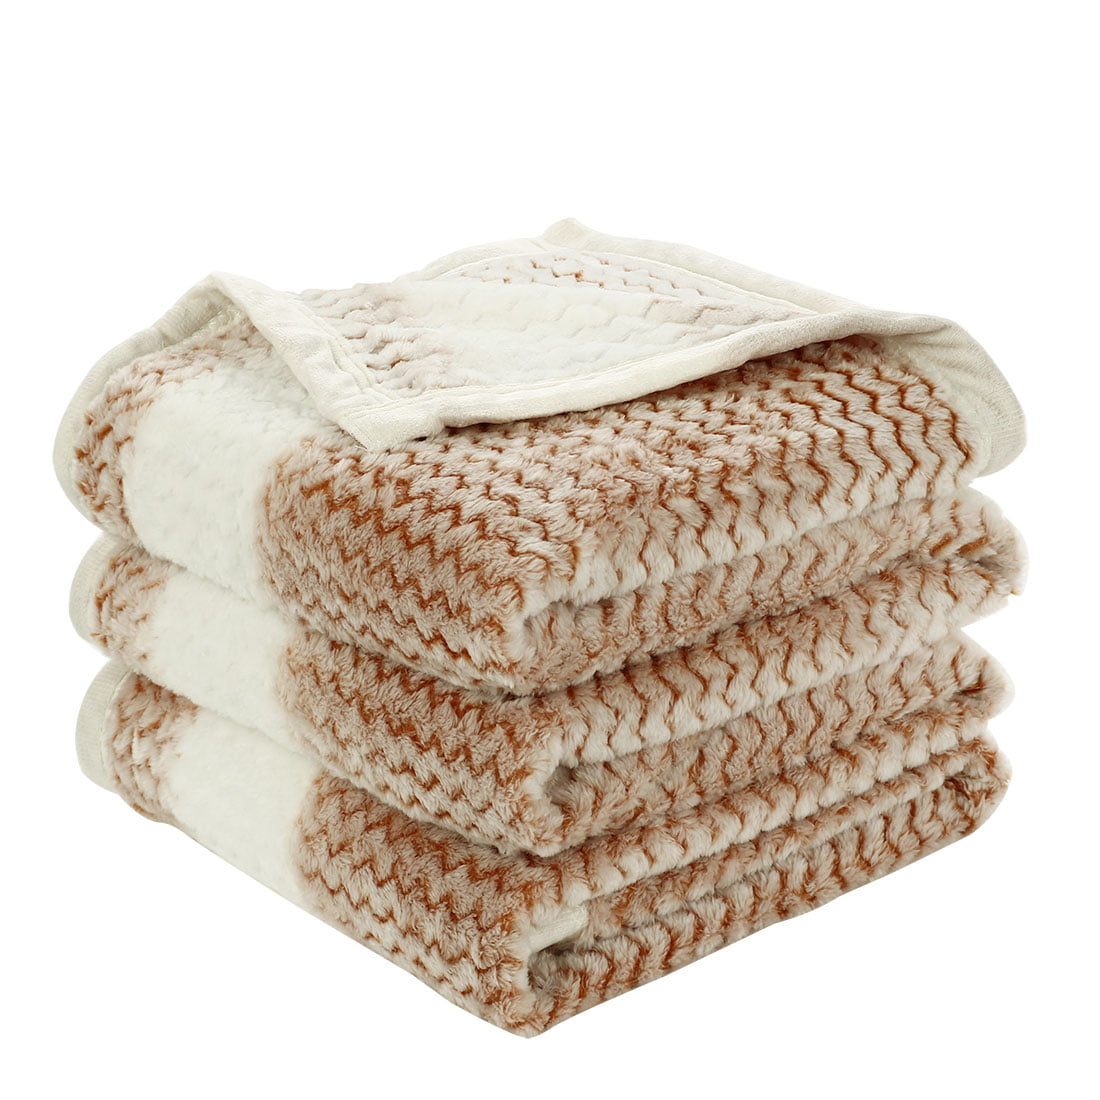 Blanket Original Soft Warm Plush Blankets Throws Full King/Queen Size 